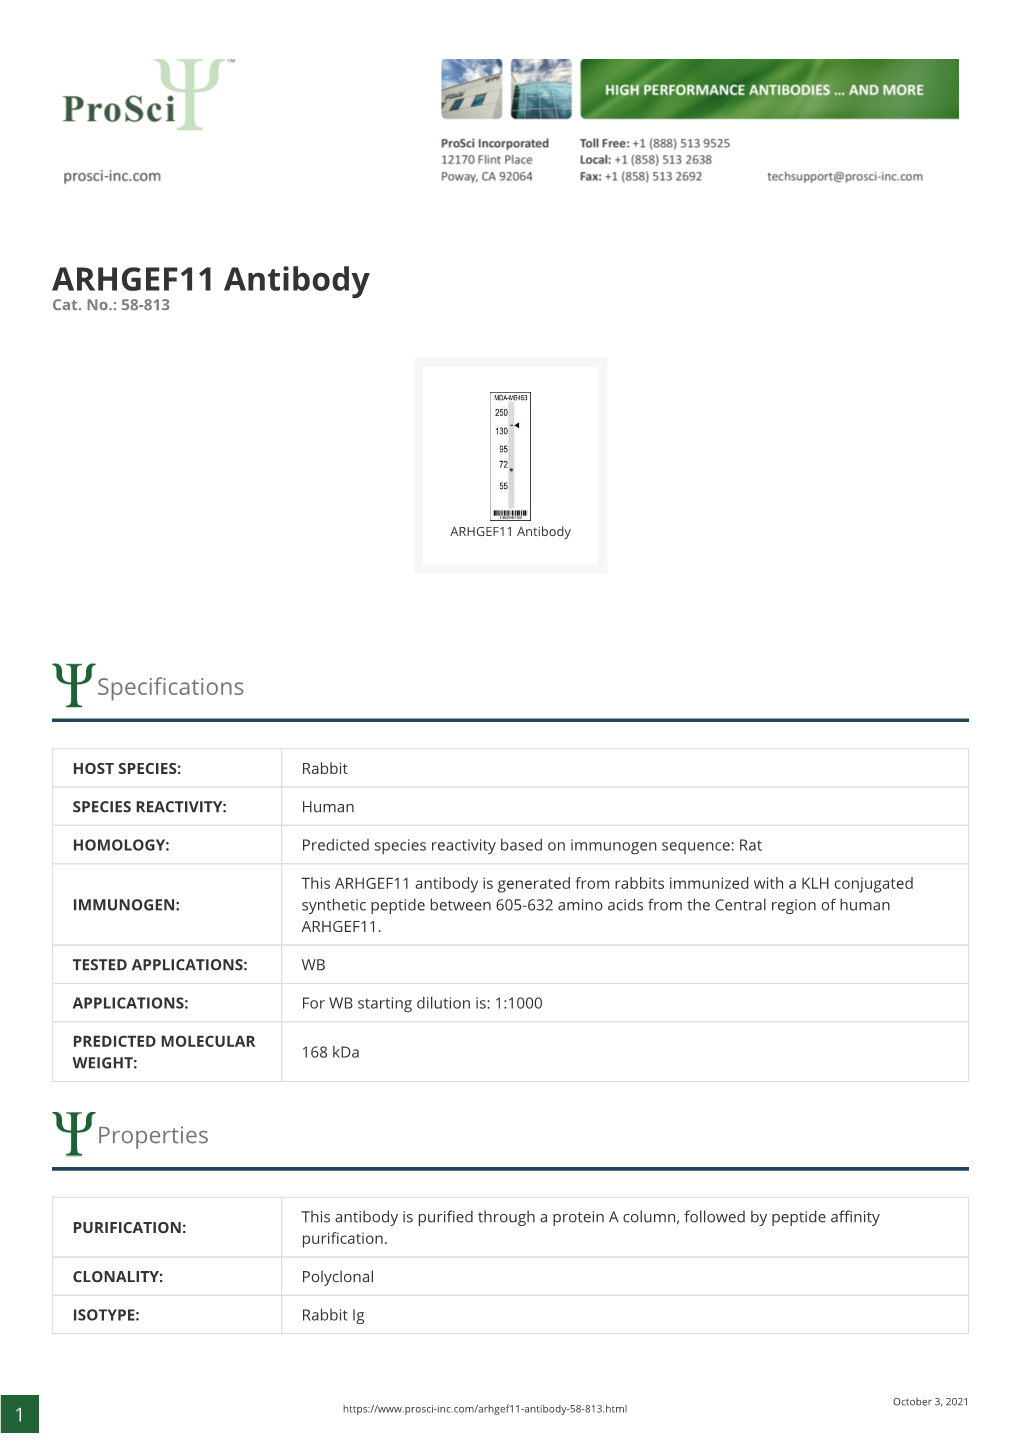 ARHGEF11 Antibody Cat